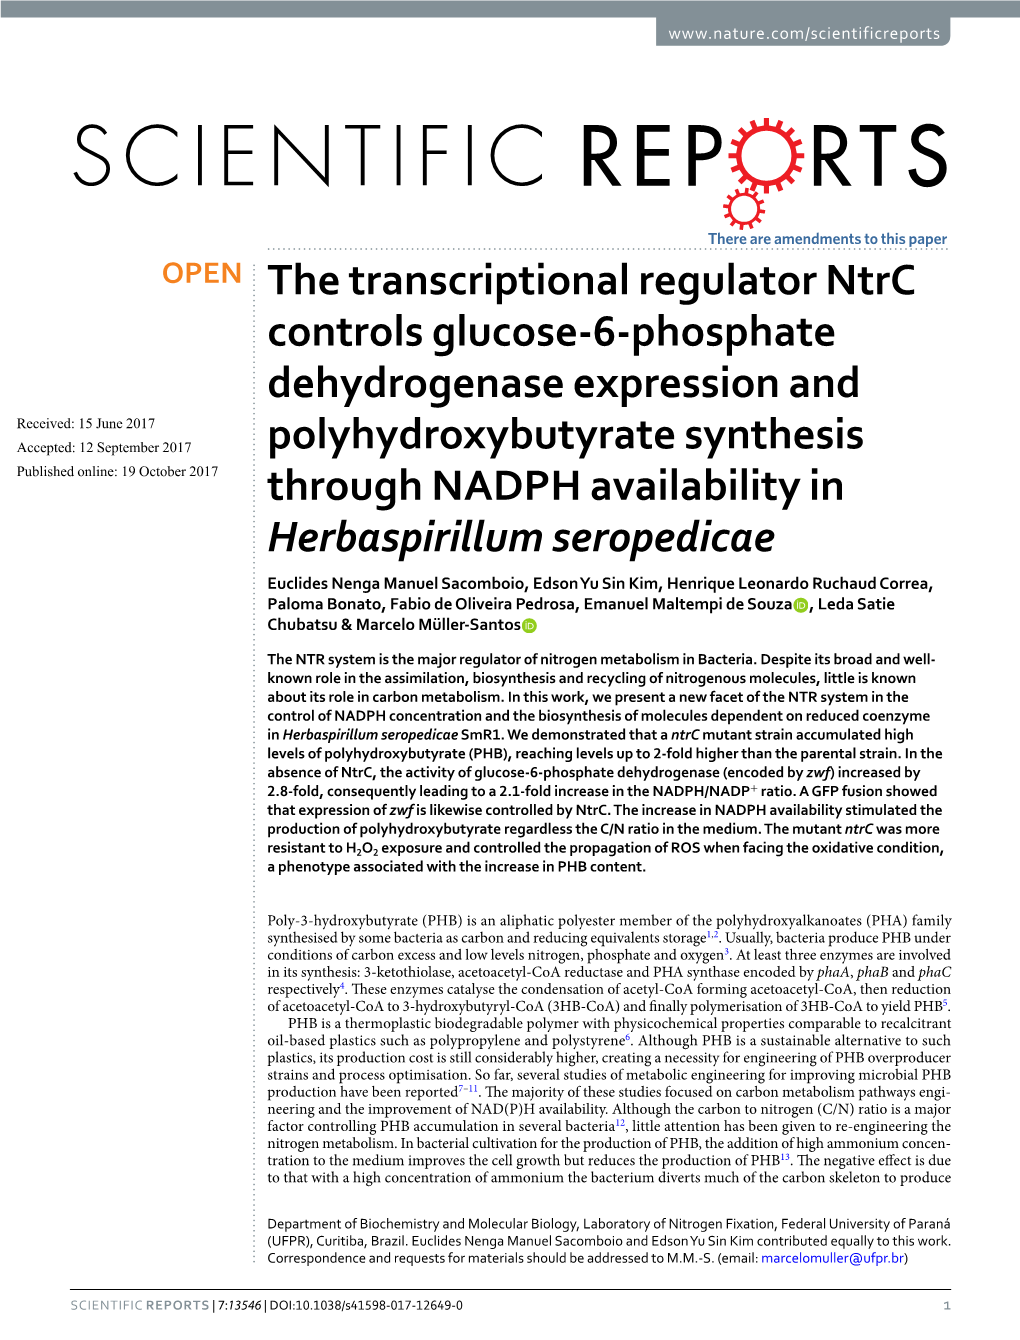 The Transcriptional Regulator Ntrc Controls Glucose-6-Phosphate